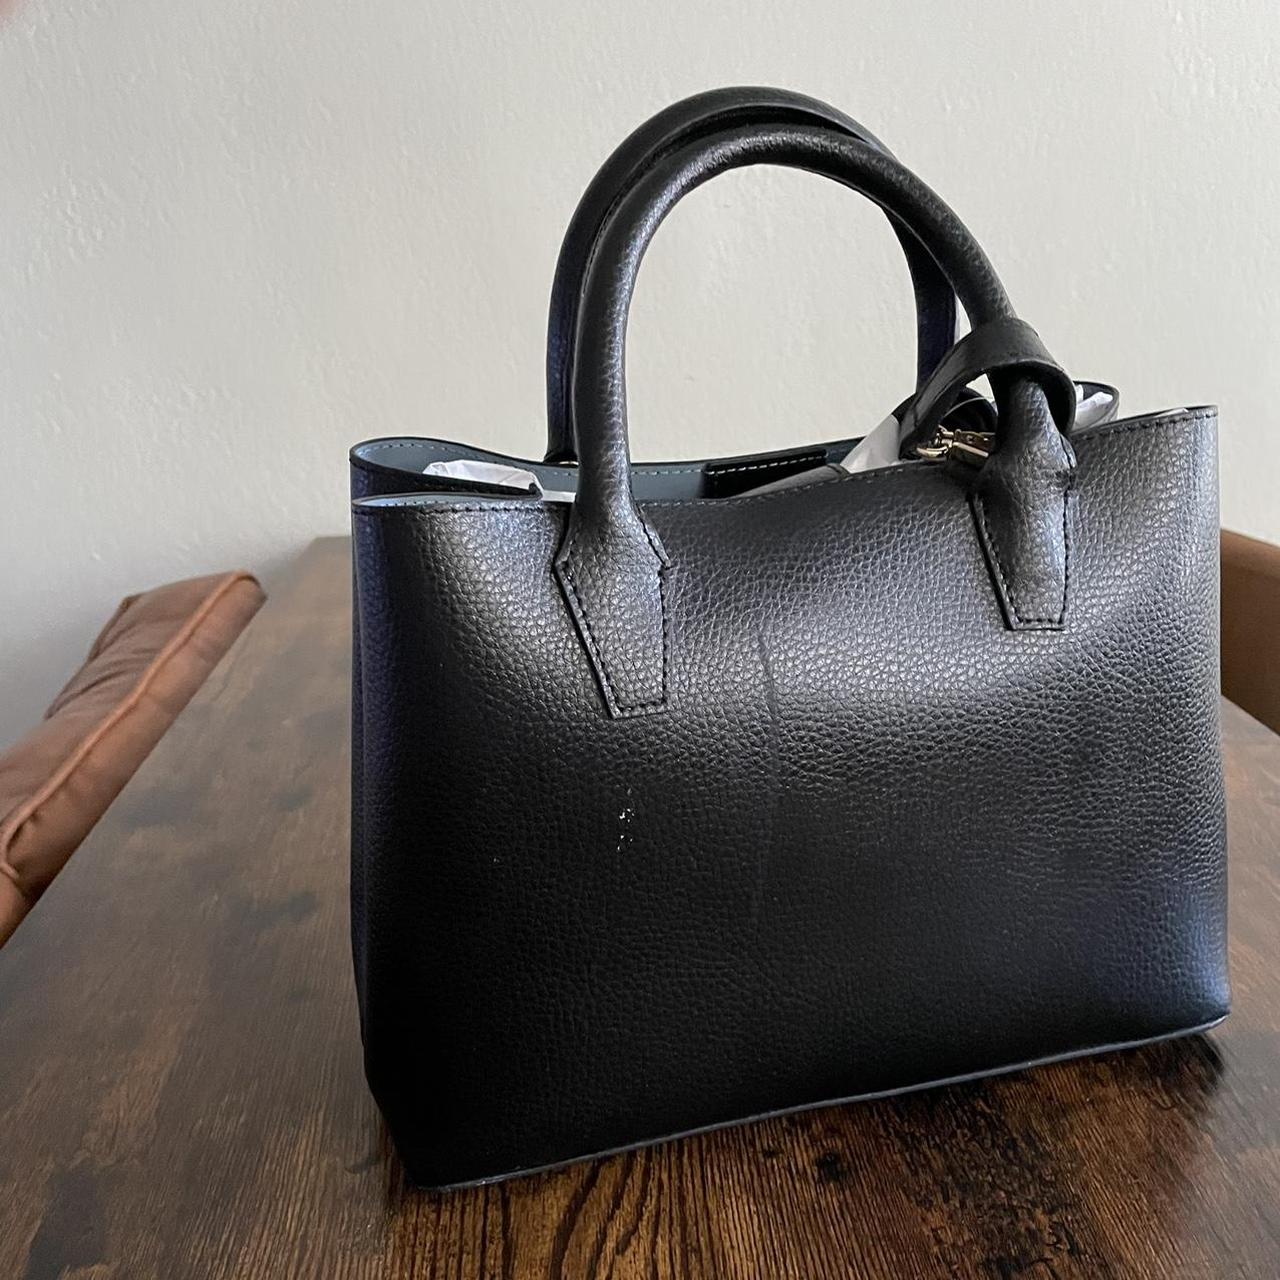 Product Image 2 - Barney’s New York
Jane leather satchel